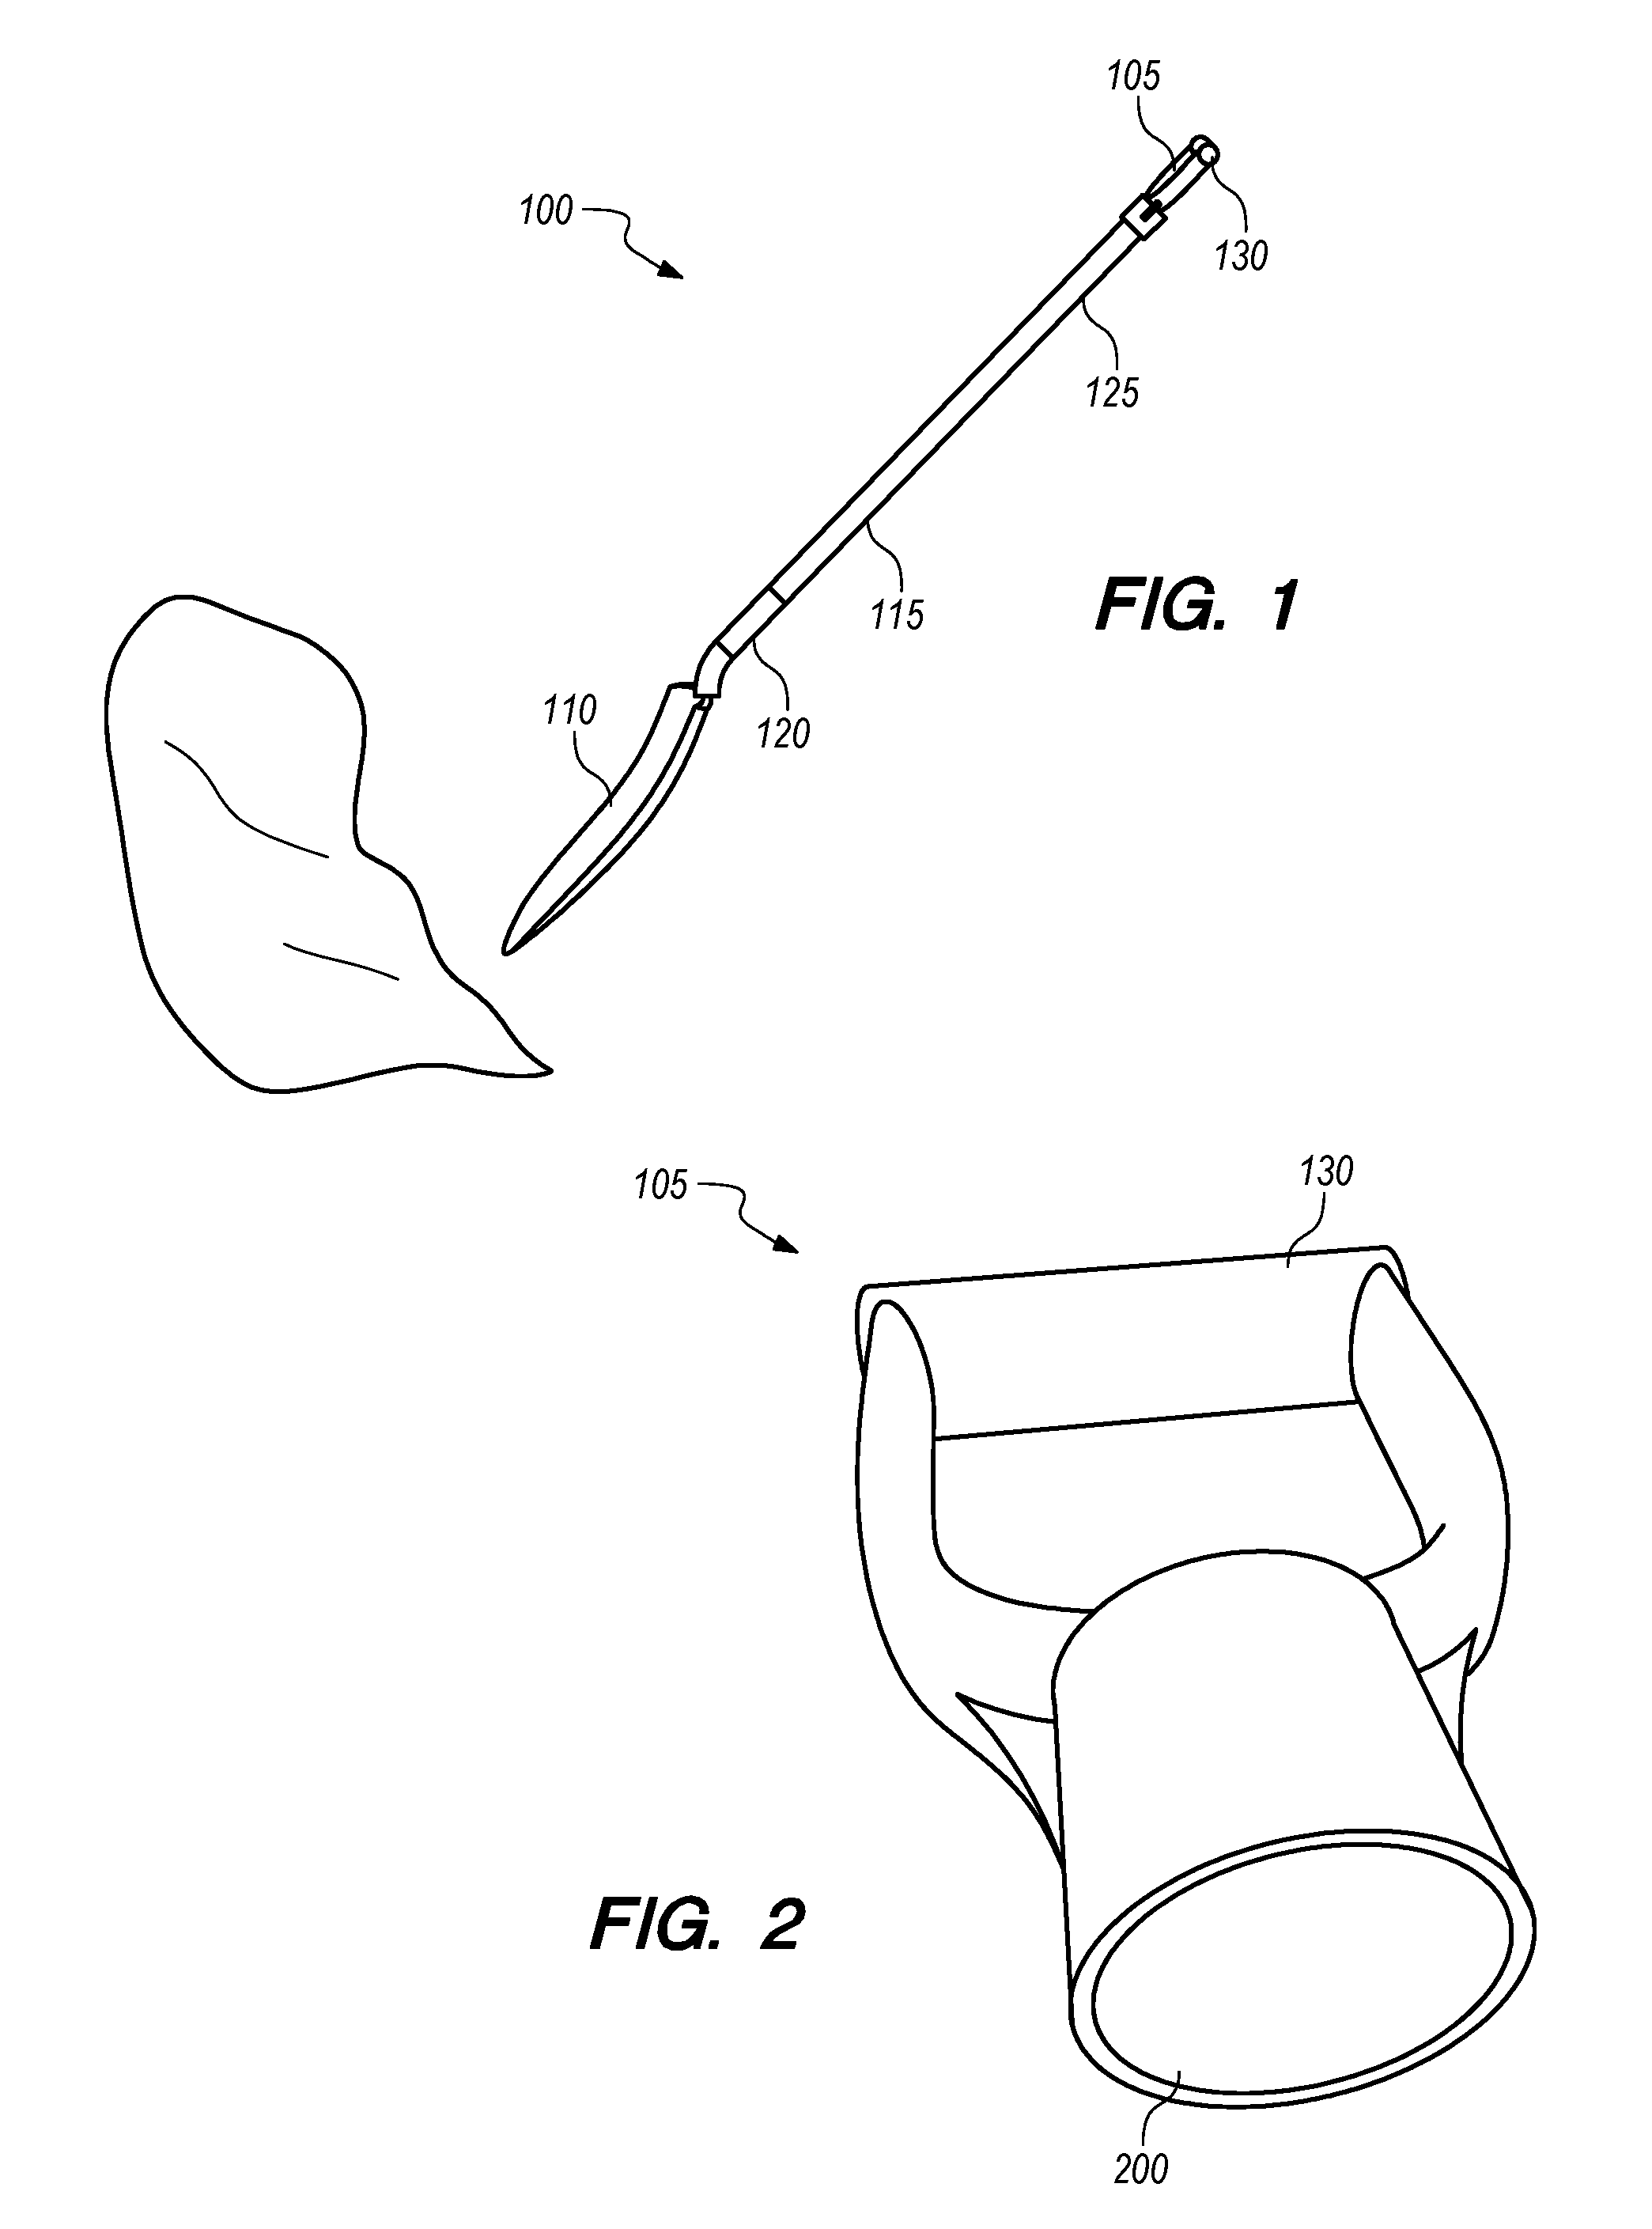 Apparatus for ergonomic application of rotational handle garden tool